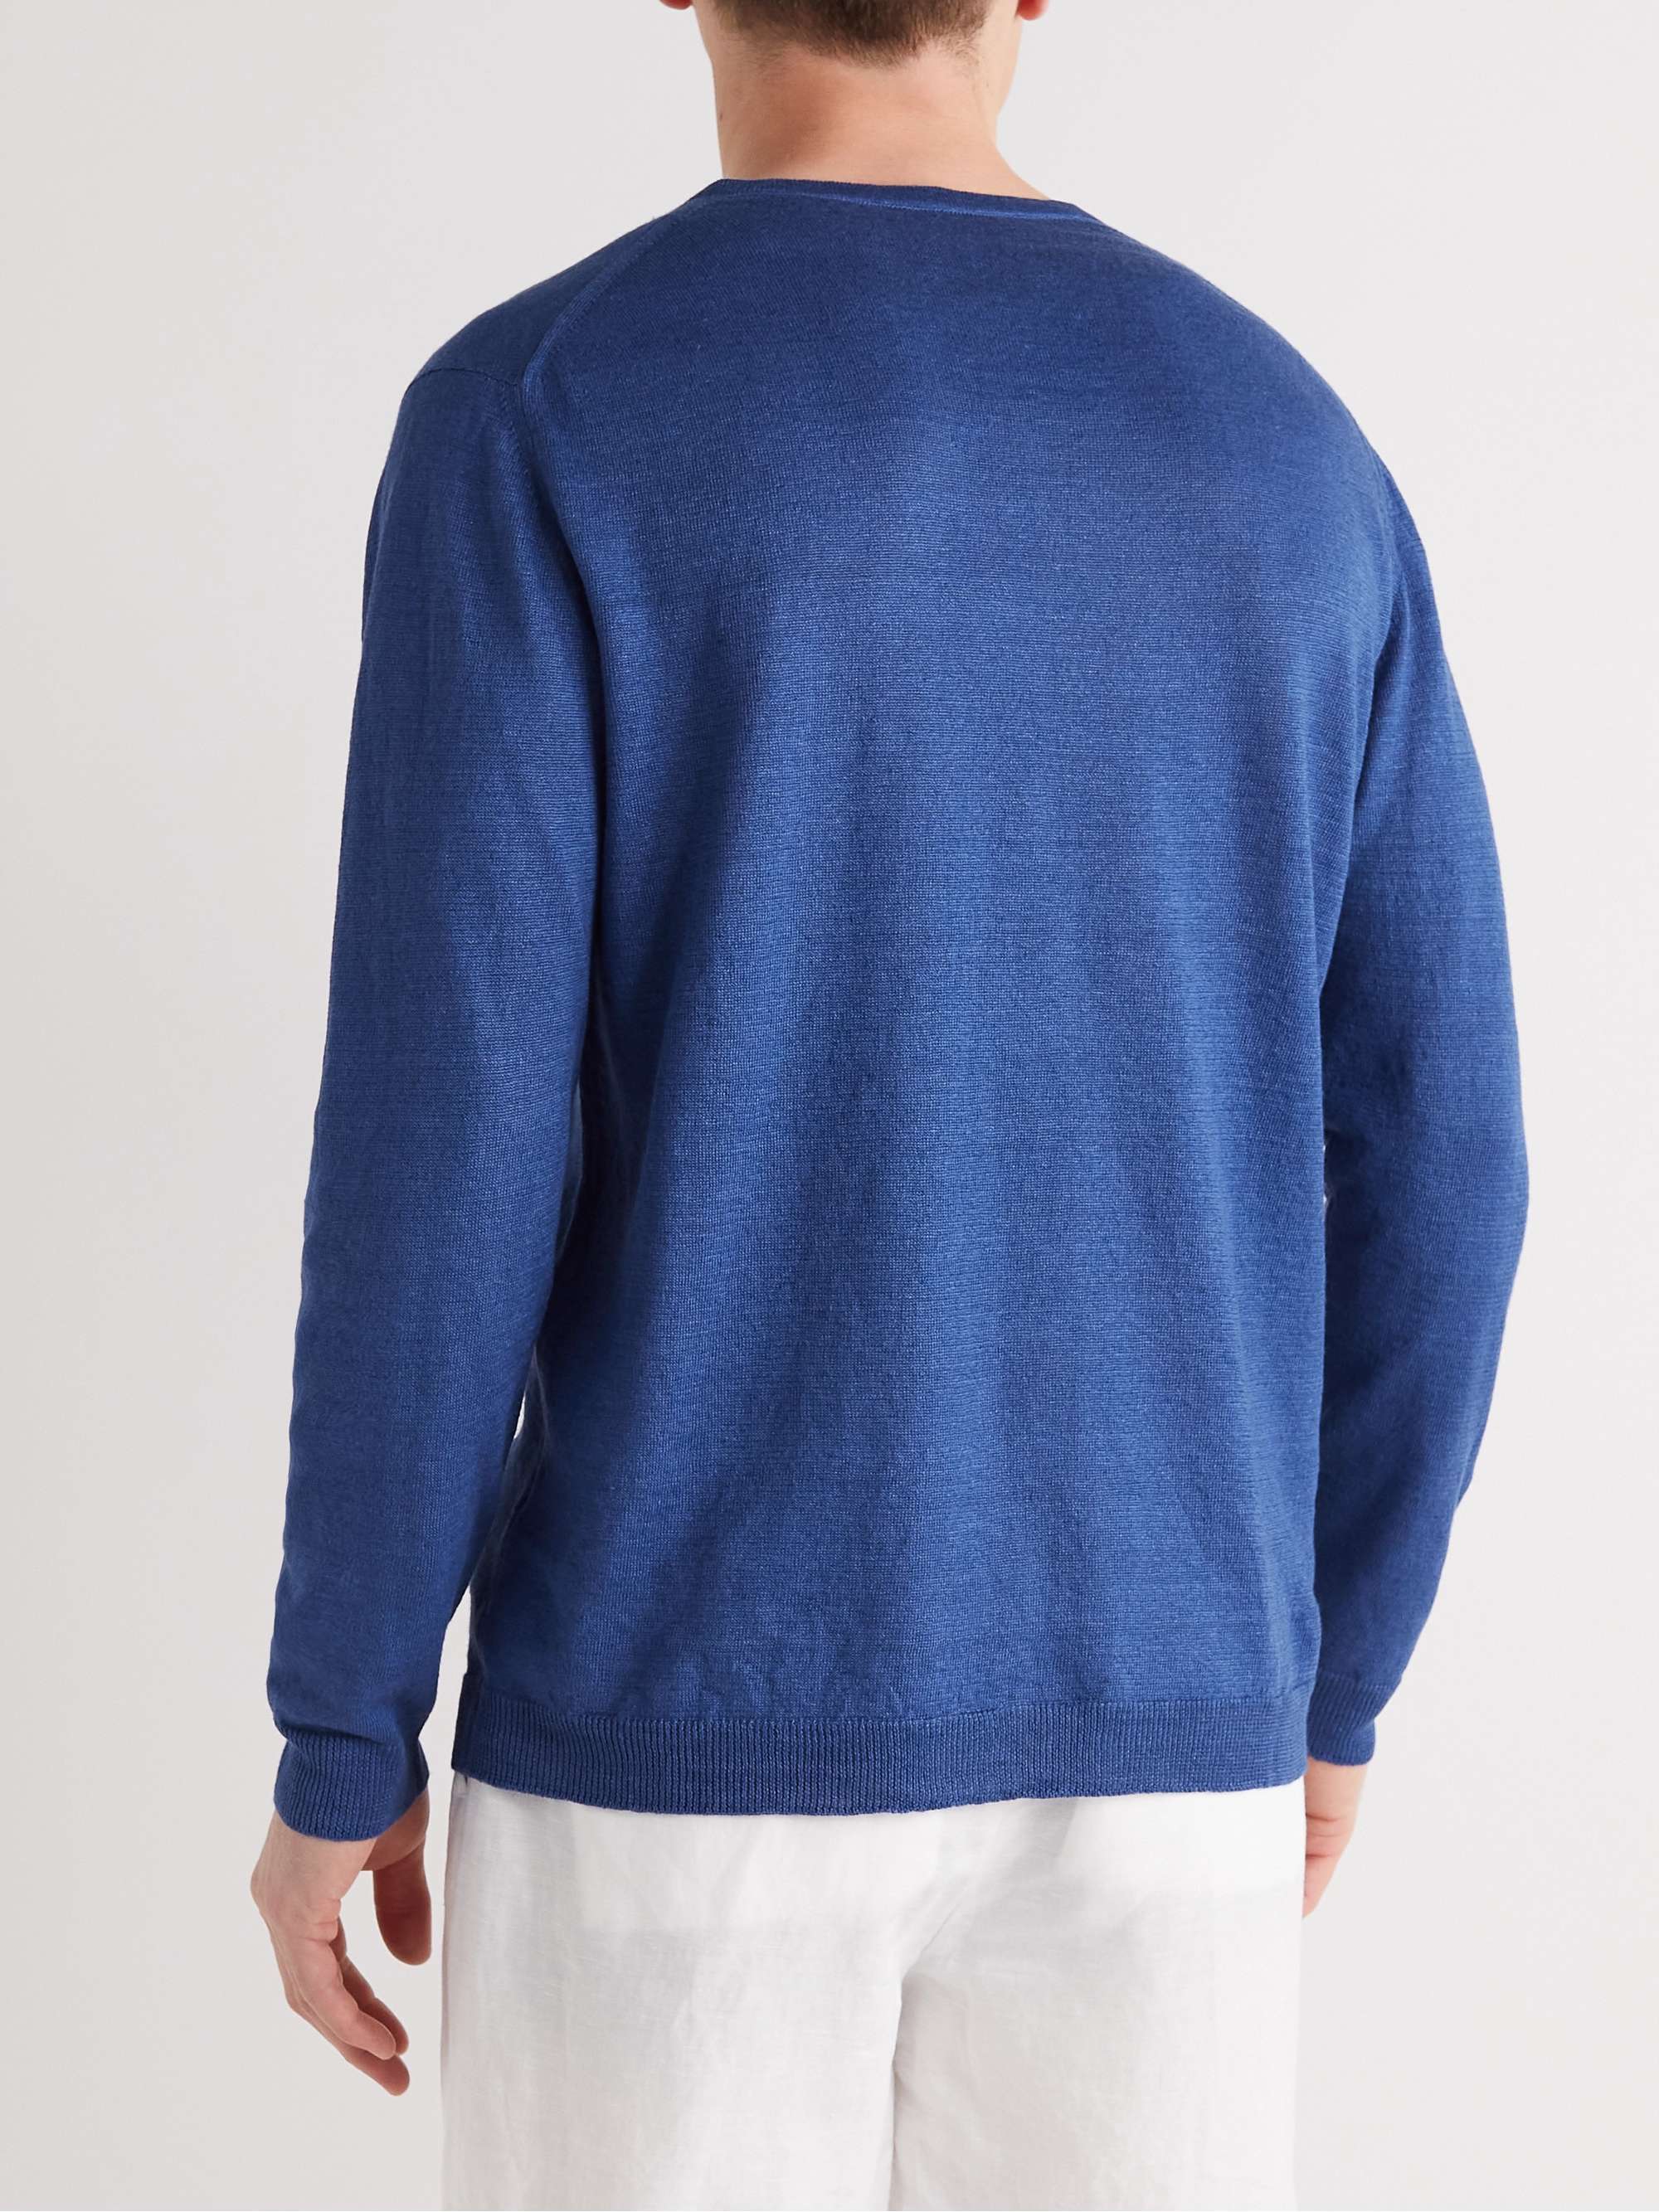 ANDERSON & SHEPPARD Knitted Linen Henley T-Shirt for Men | MR PORTER